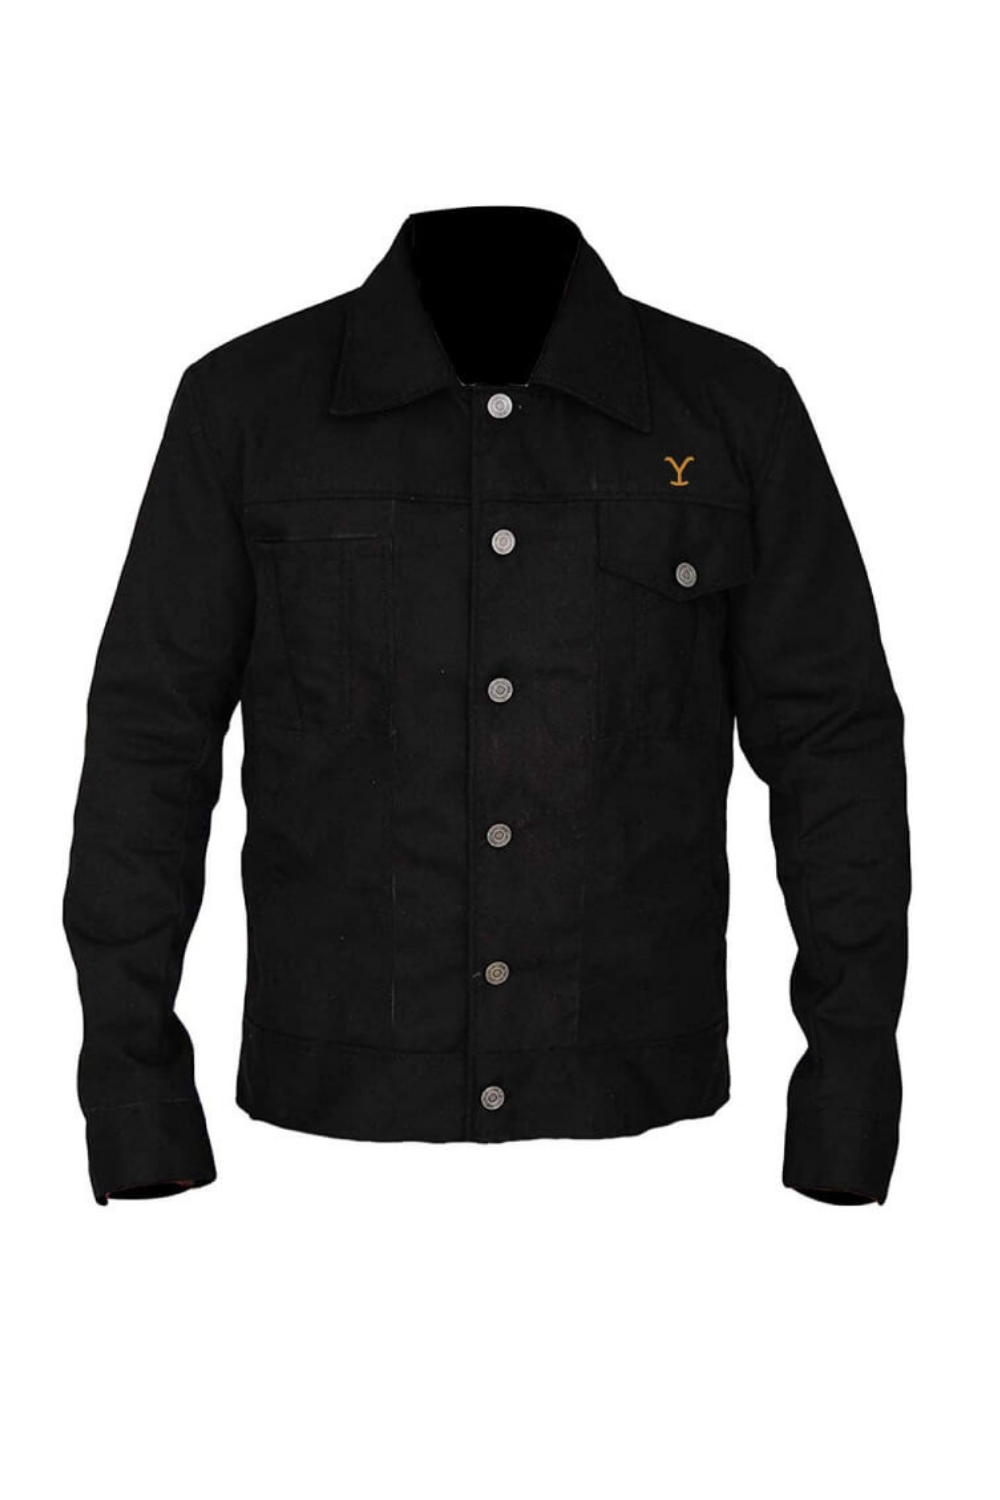 Yellowstone Cotton Black Cole Hauser Rip Wheeler Jacket